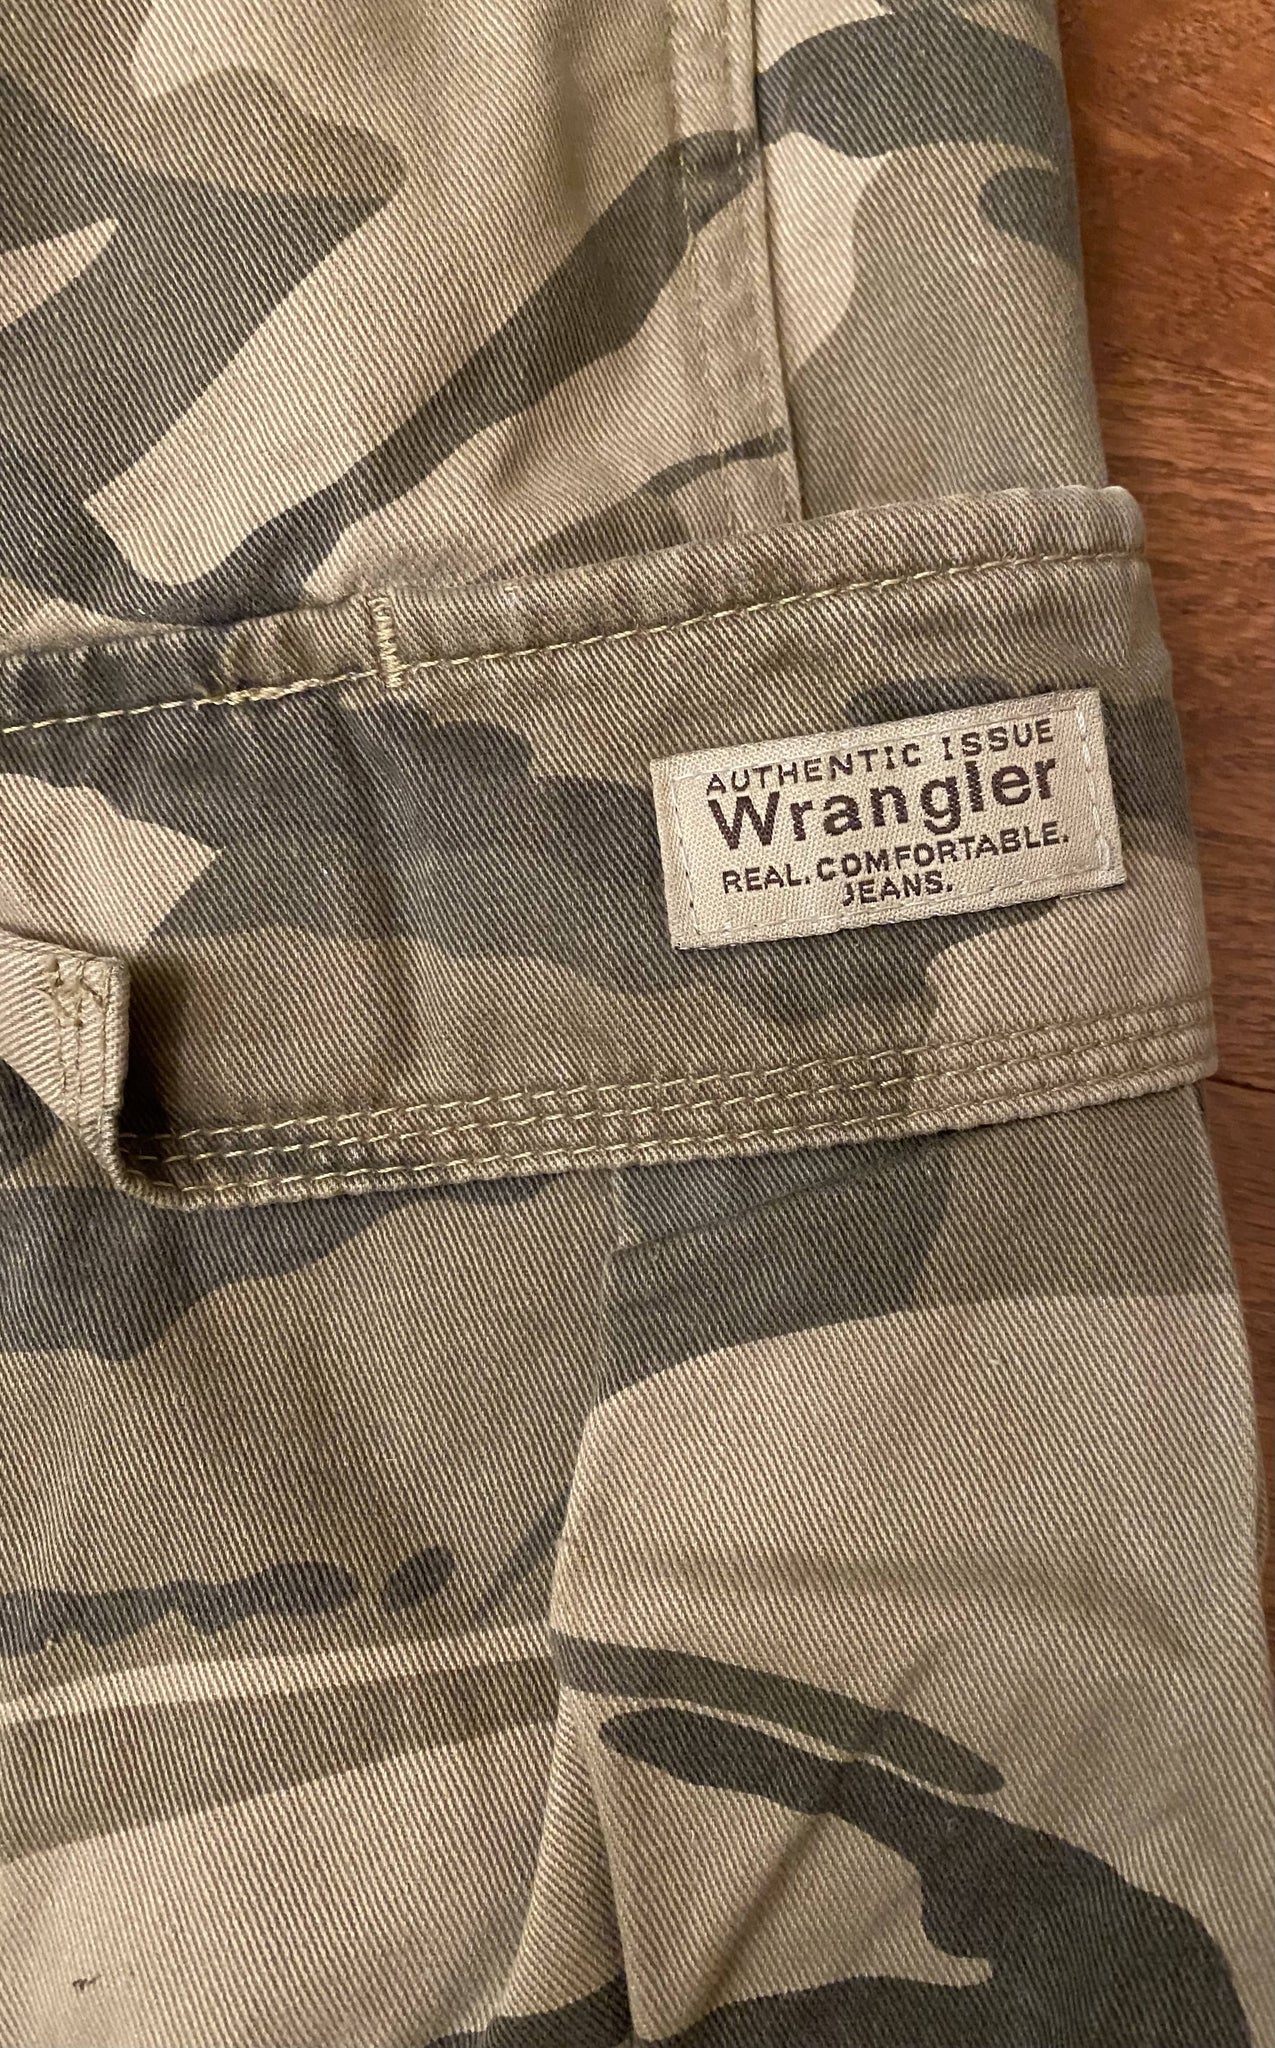 Wrangler Camouflage Jeans (38x30) – Camoretro